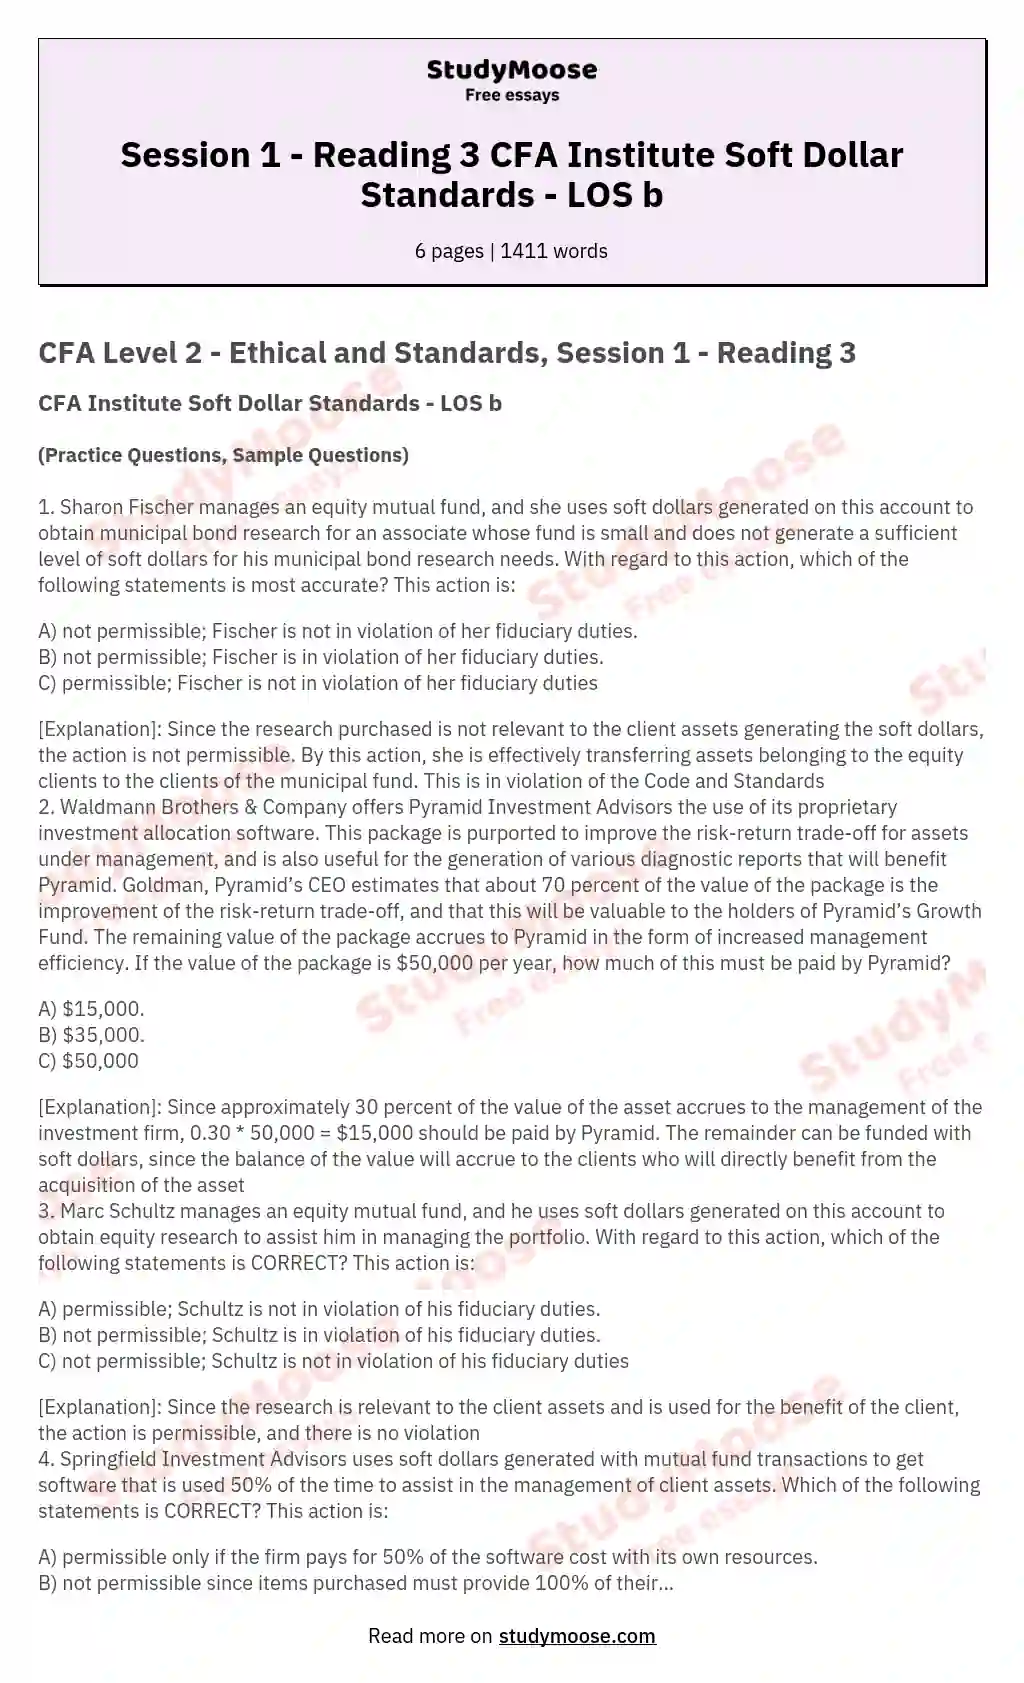 Session 1 - Reading 3 CFA Institute Soft Dollar Standards - LOS b essay